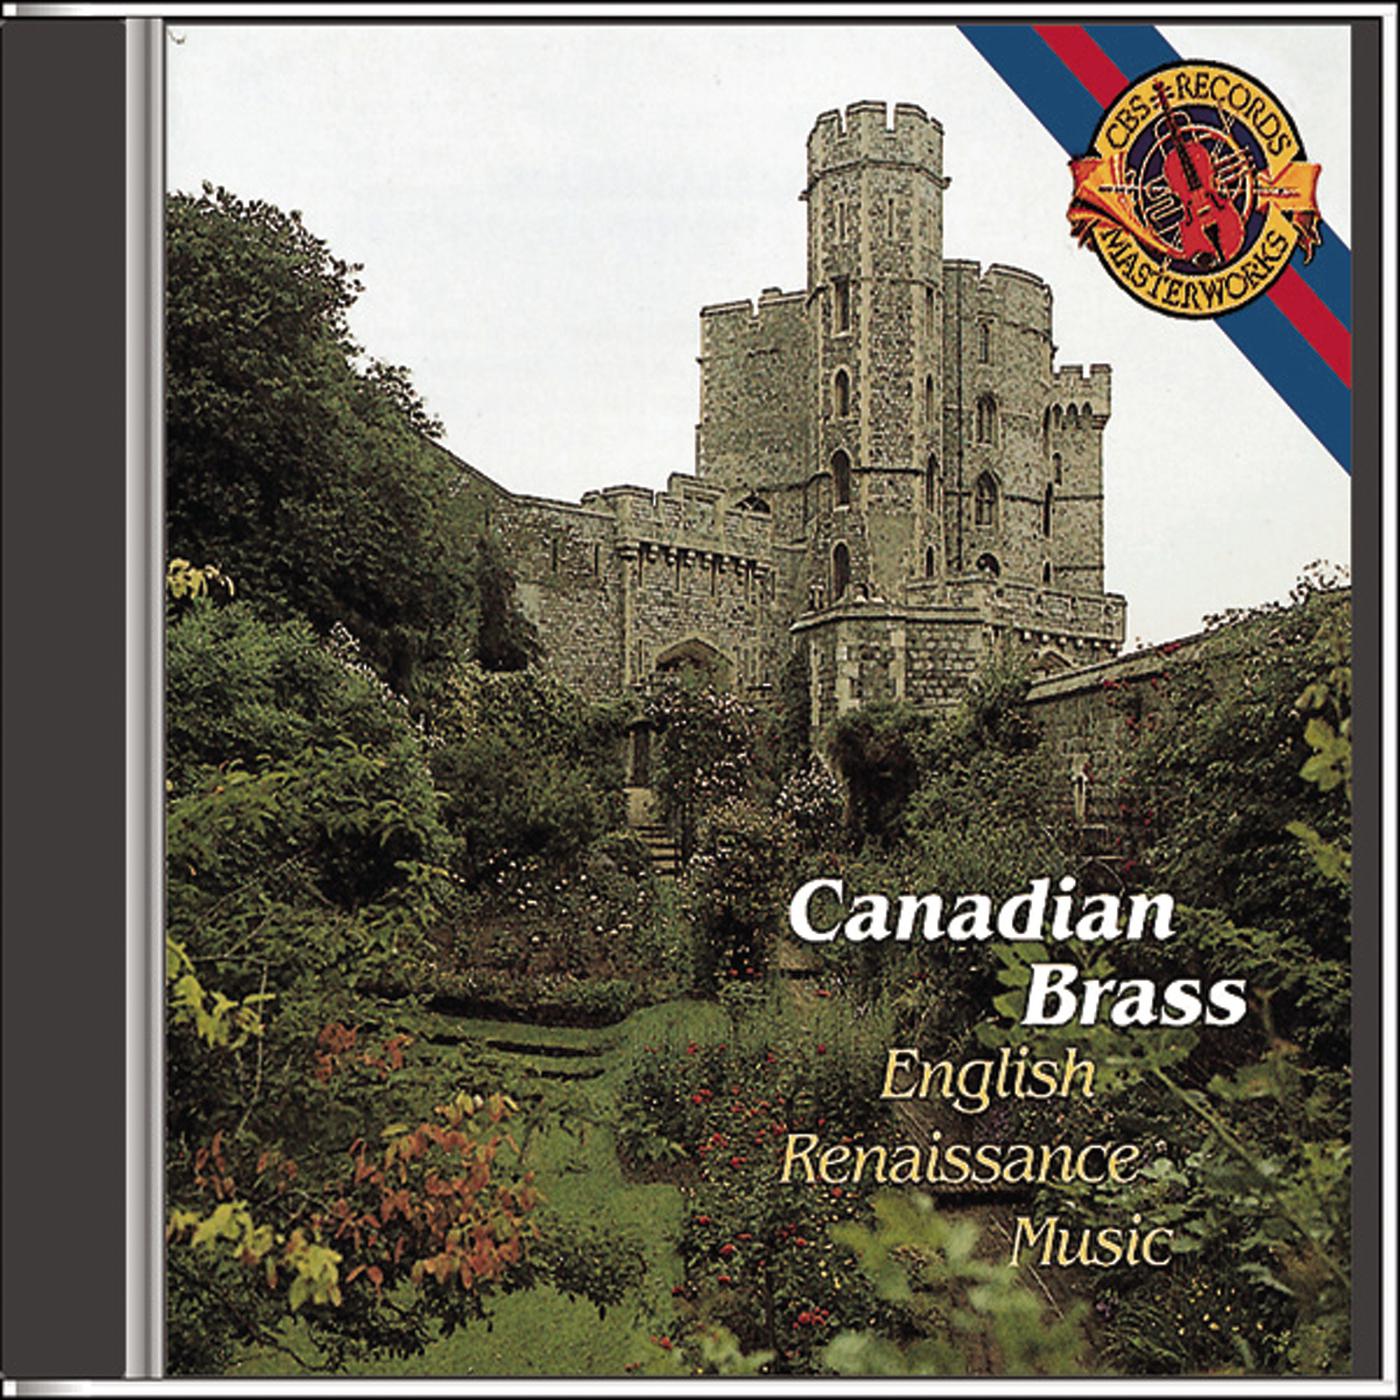 The Canadian Brass - La Volta (Instrumental)